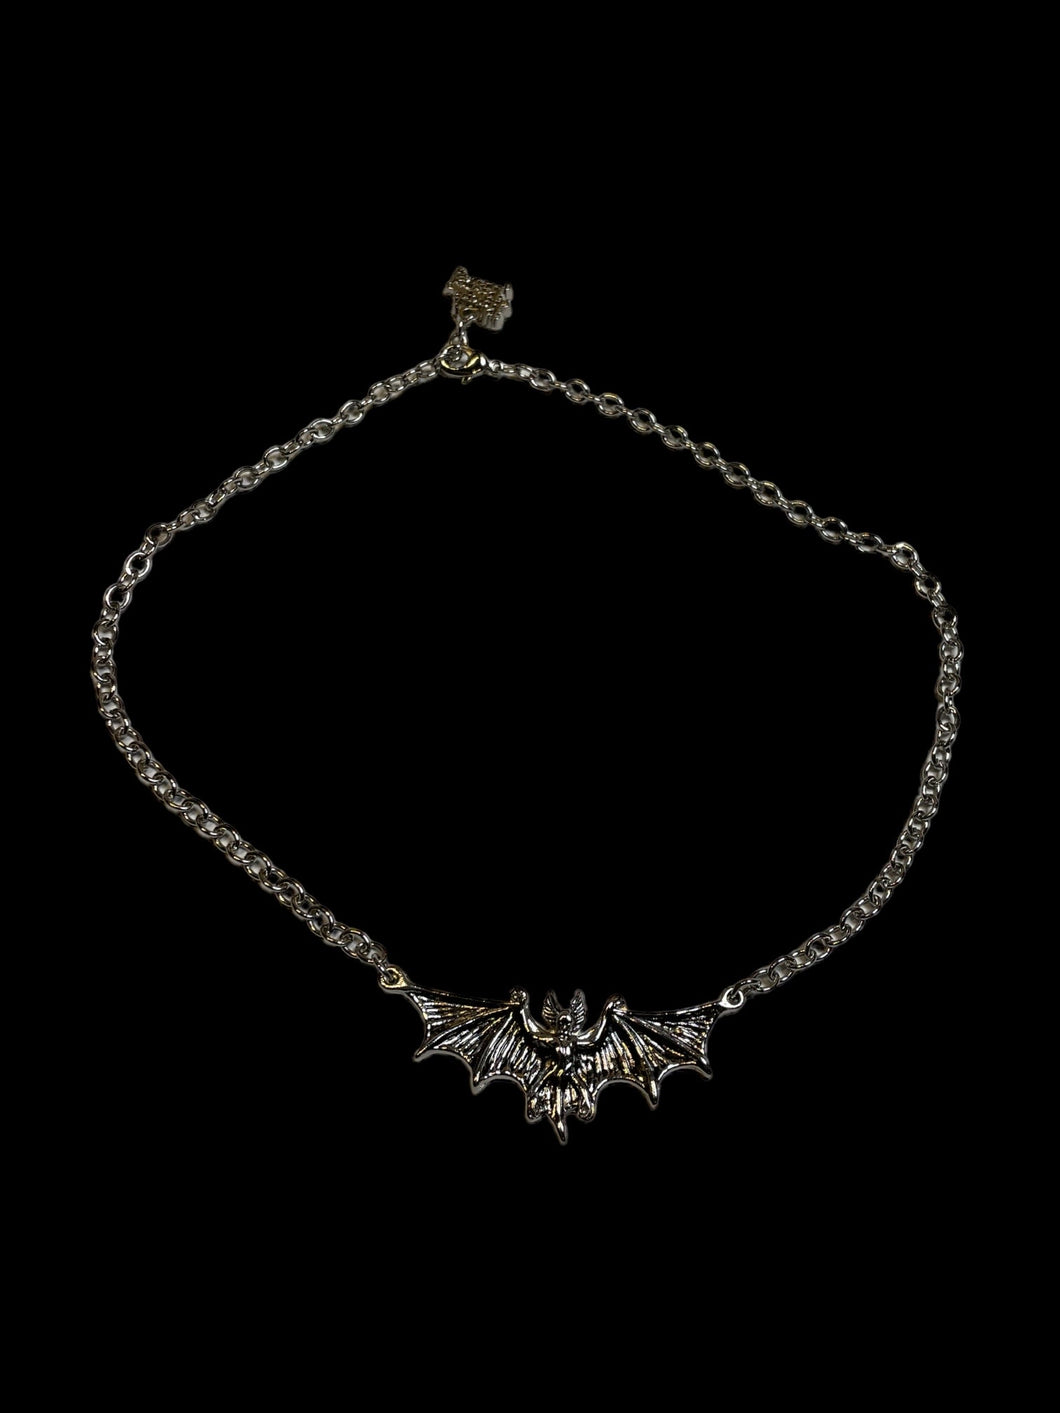 Silver-like bat necklace w/ alligator clasp chain